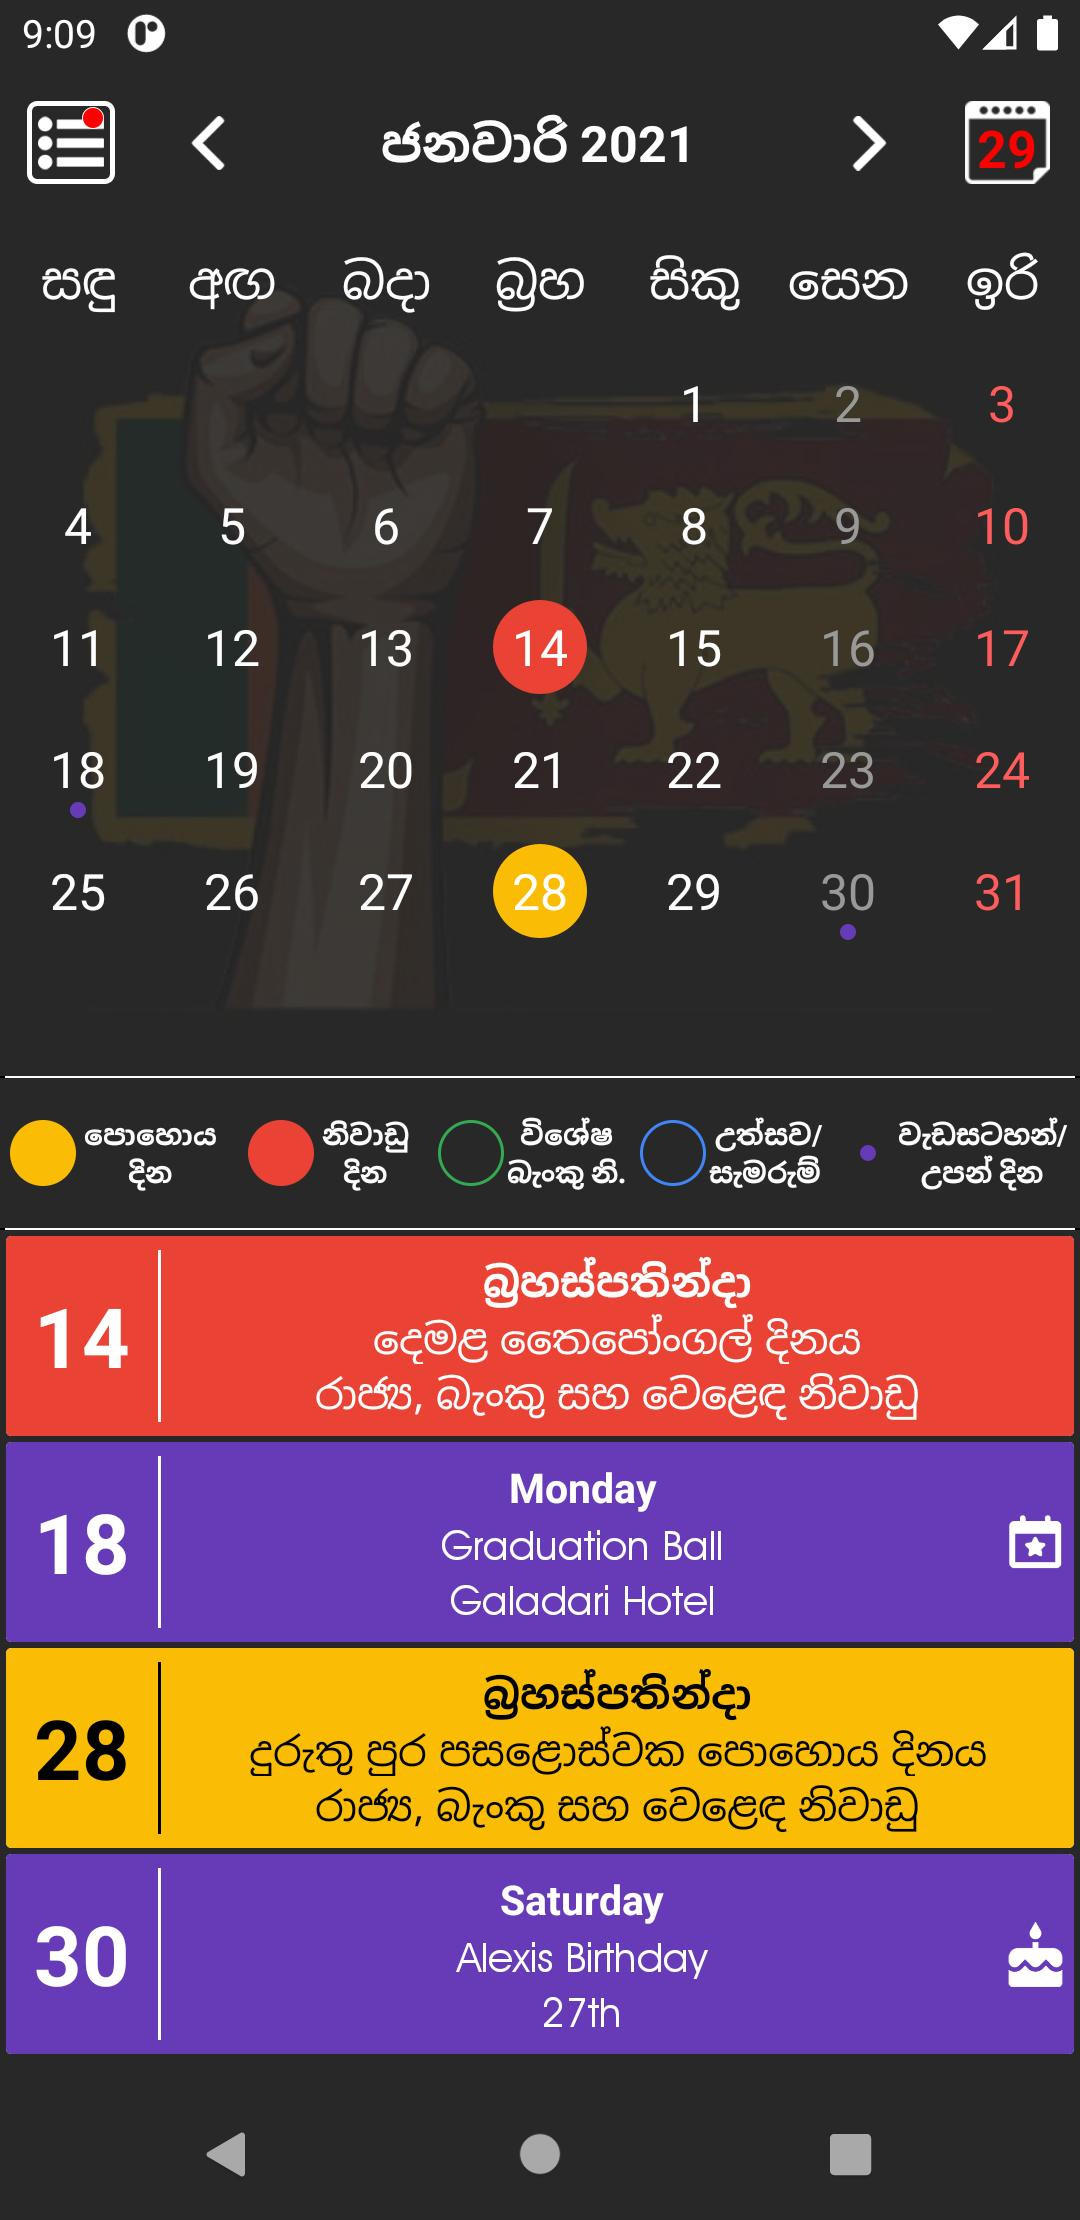 2021 Calendar Sri Lanka - Nexta-Mercantile Holidays 2021 Sri Lanka Gazet